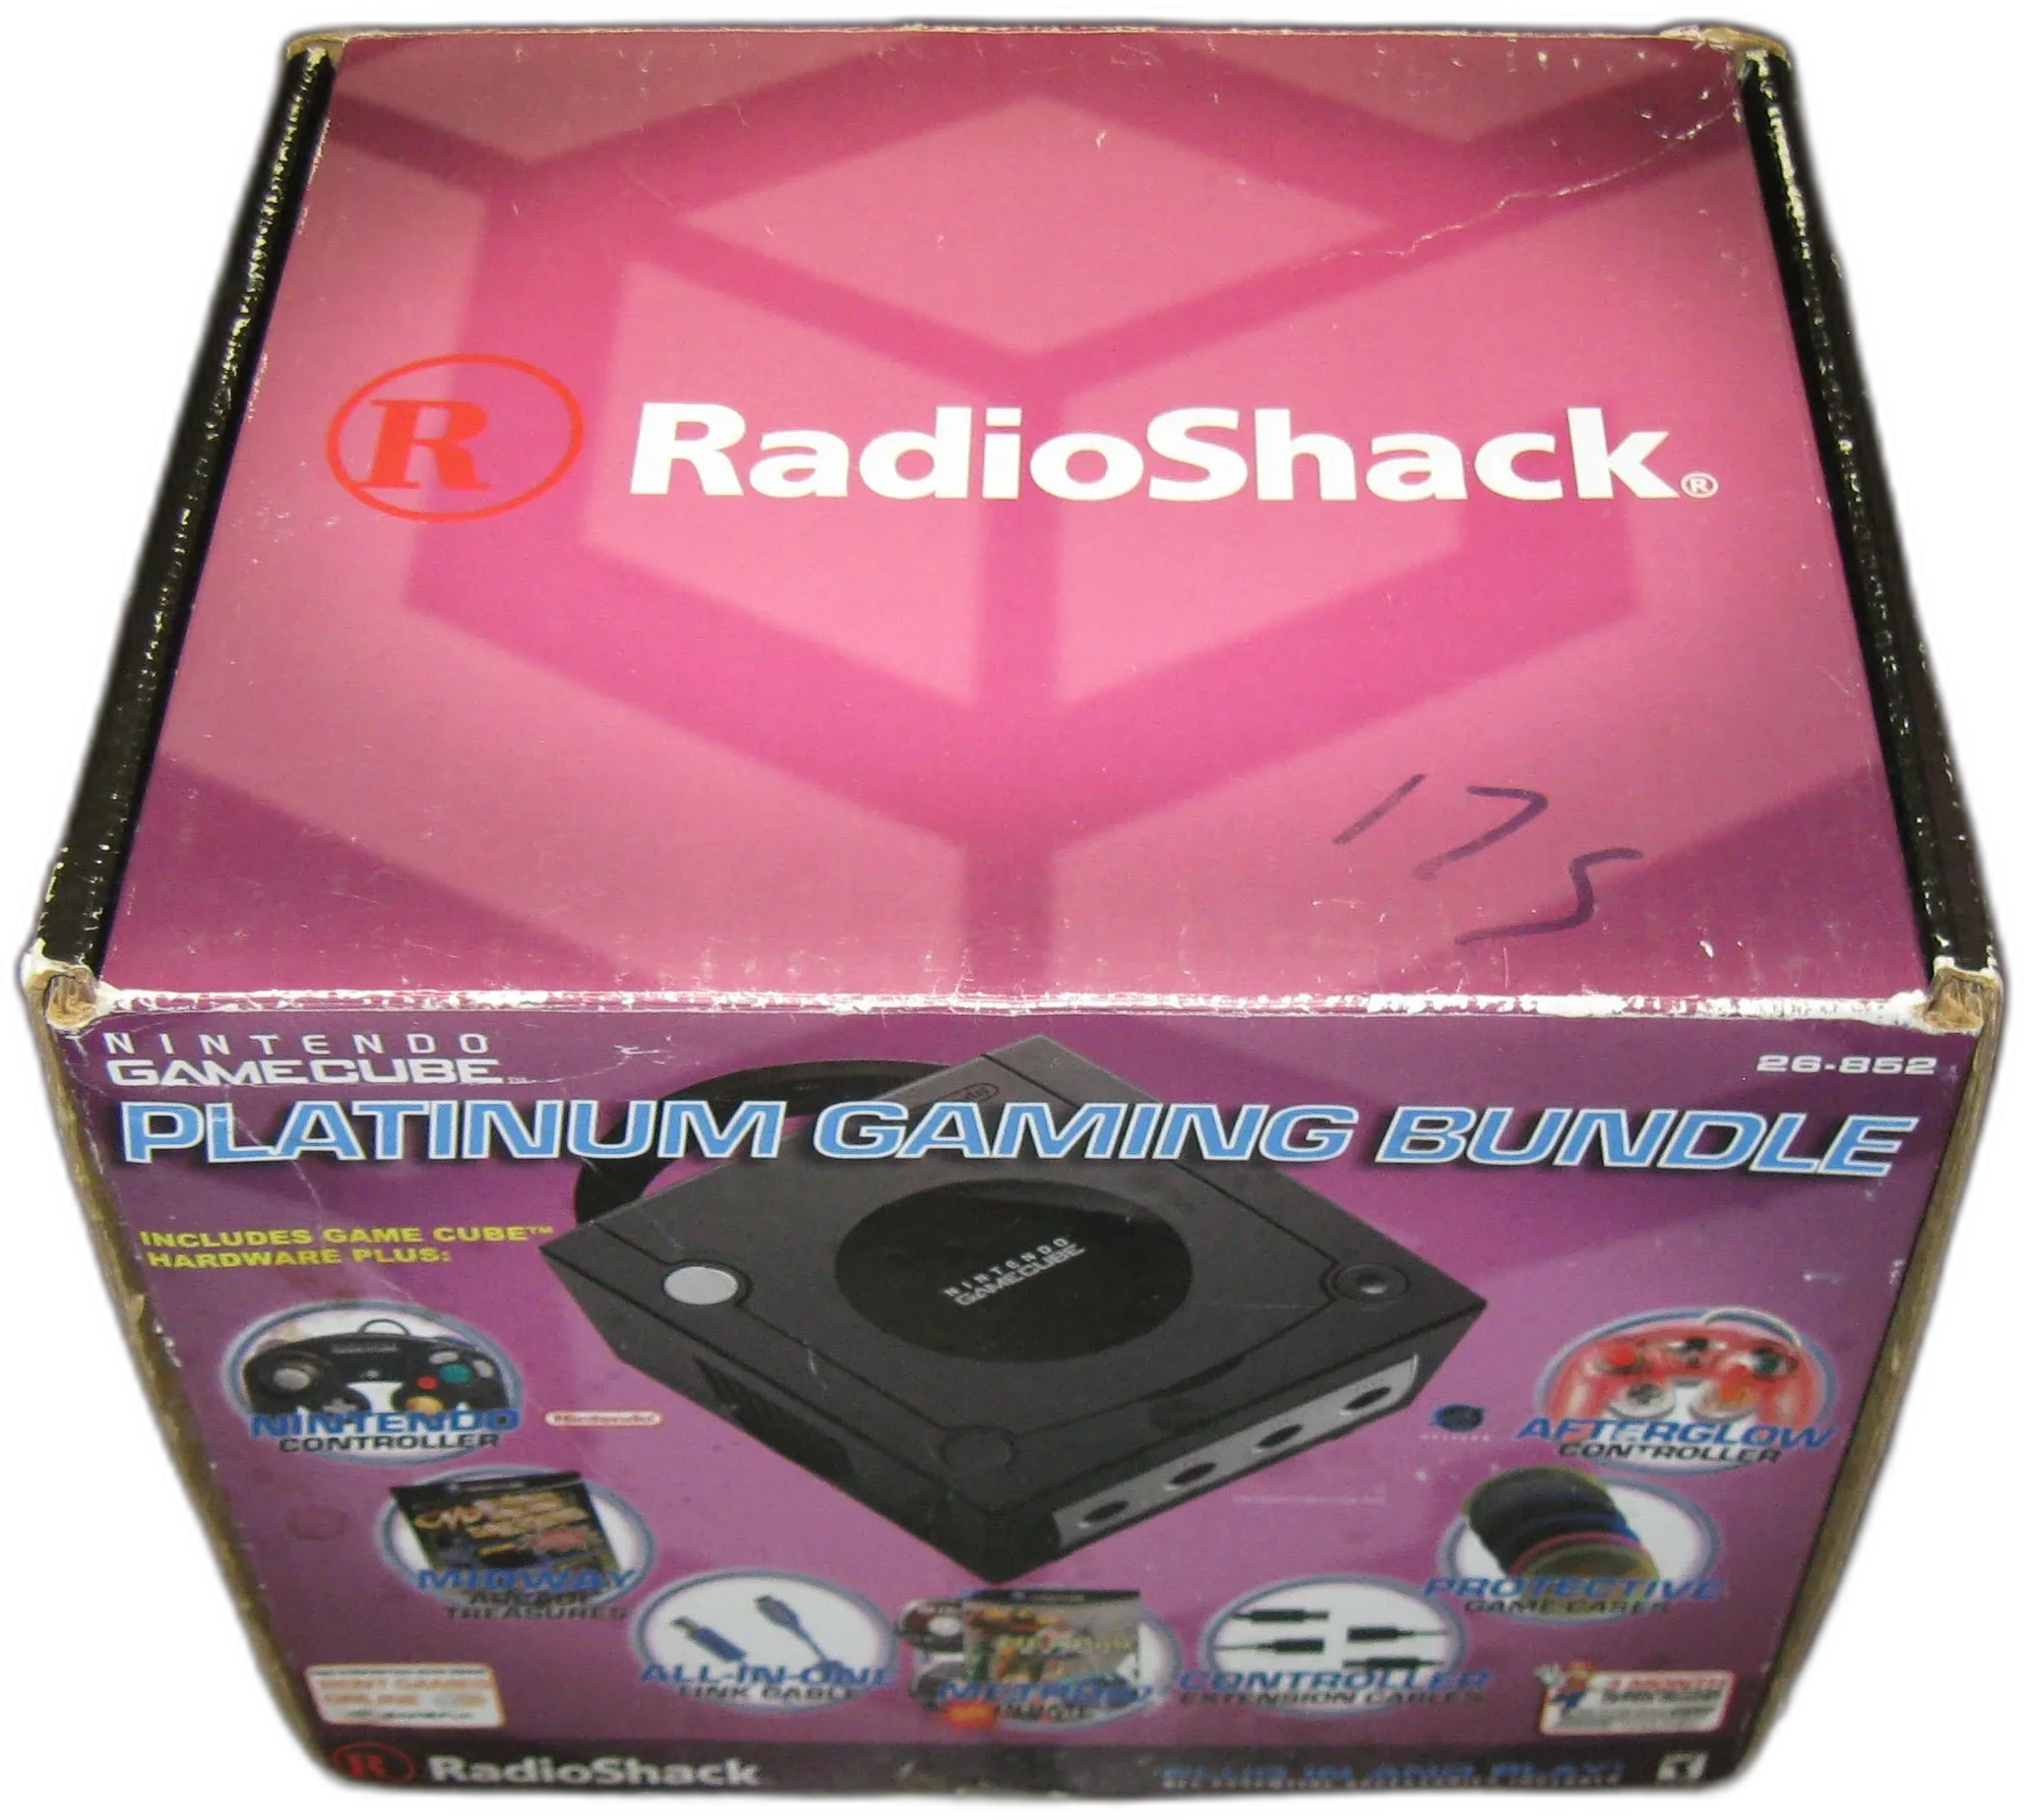  Nintendo GameCube RadioShack Platinum Gaming Bundle